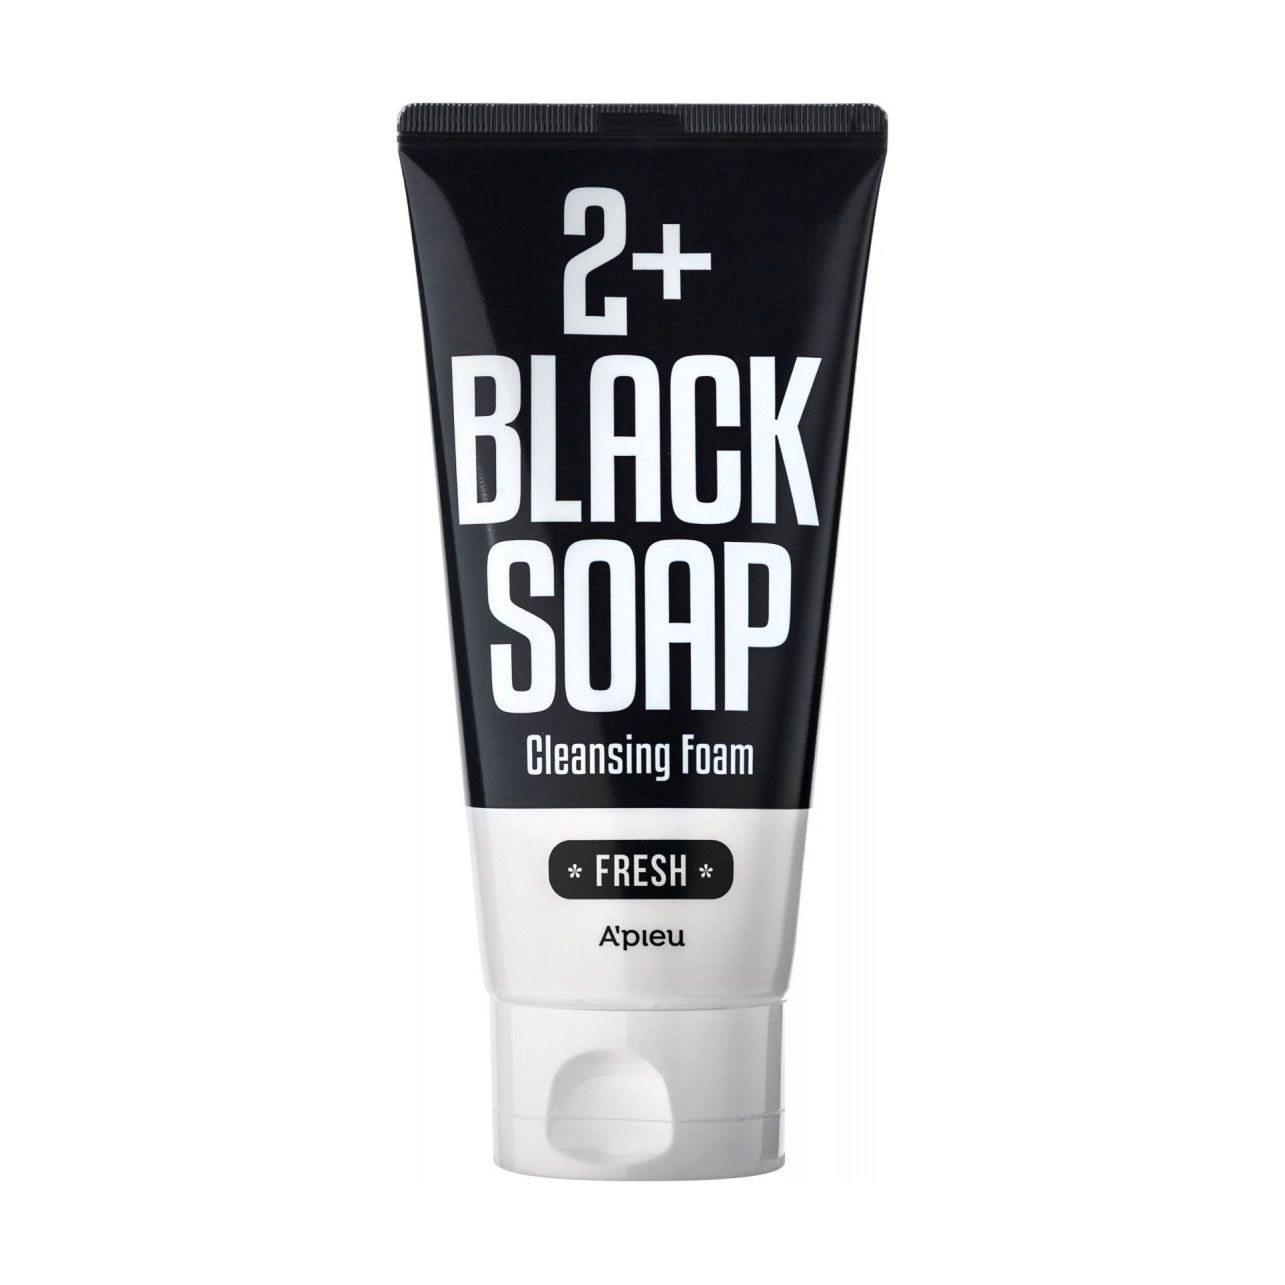 A'pieu Очищувальна пінка для обличчя 2+Black Soap Cleansing Foam Fresh з марокканською глиною, 130 мл - фото N1